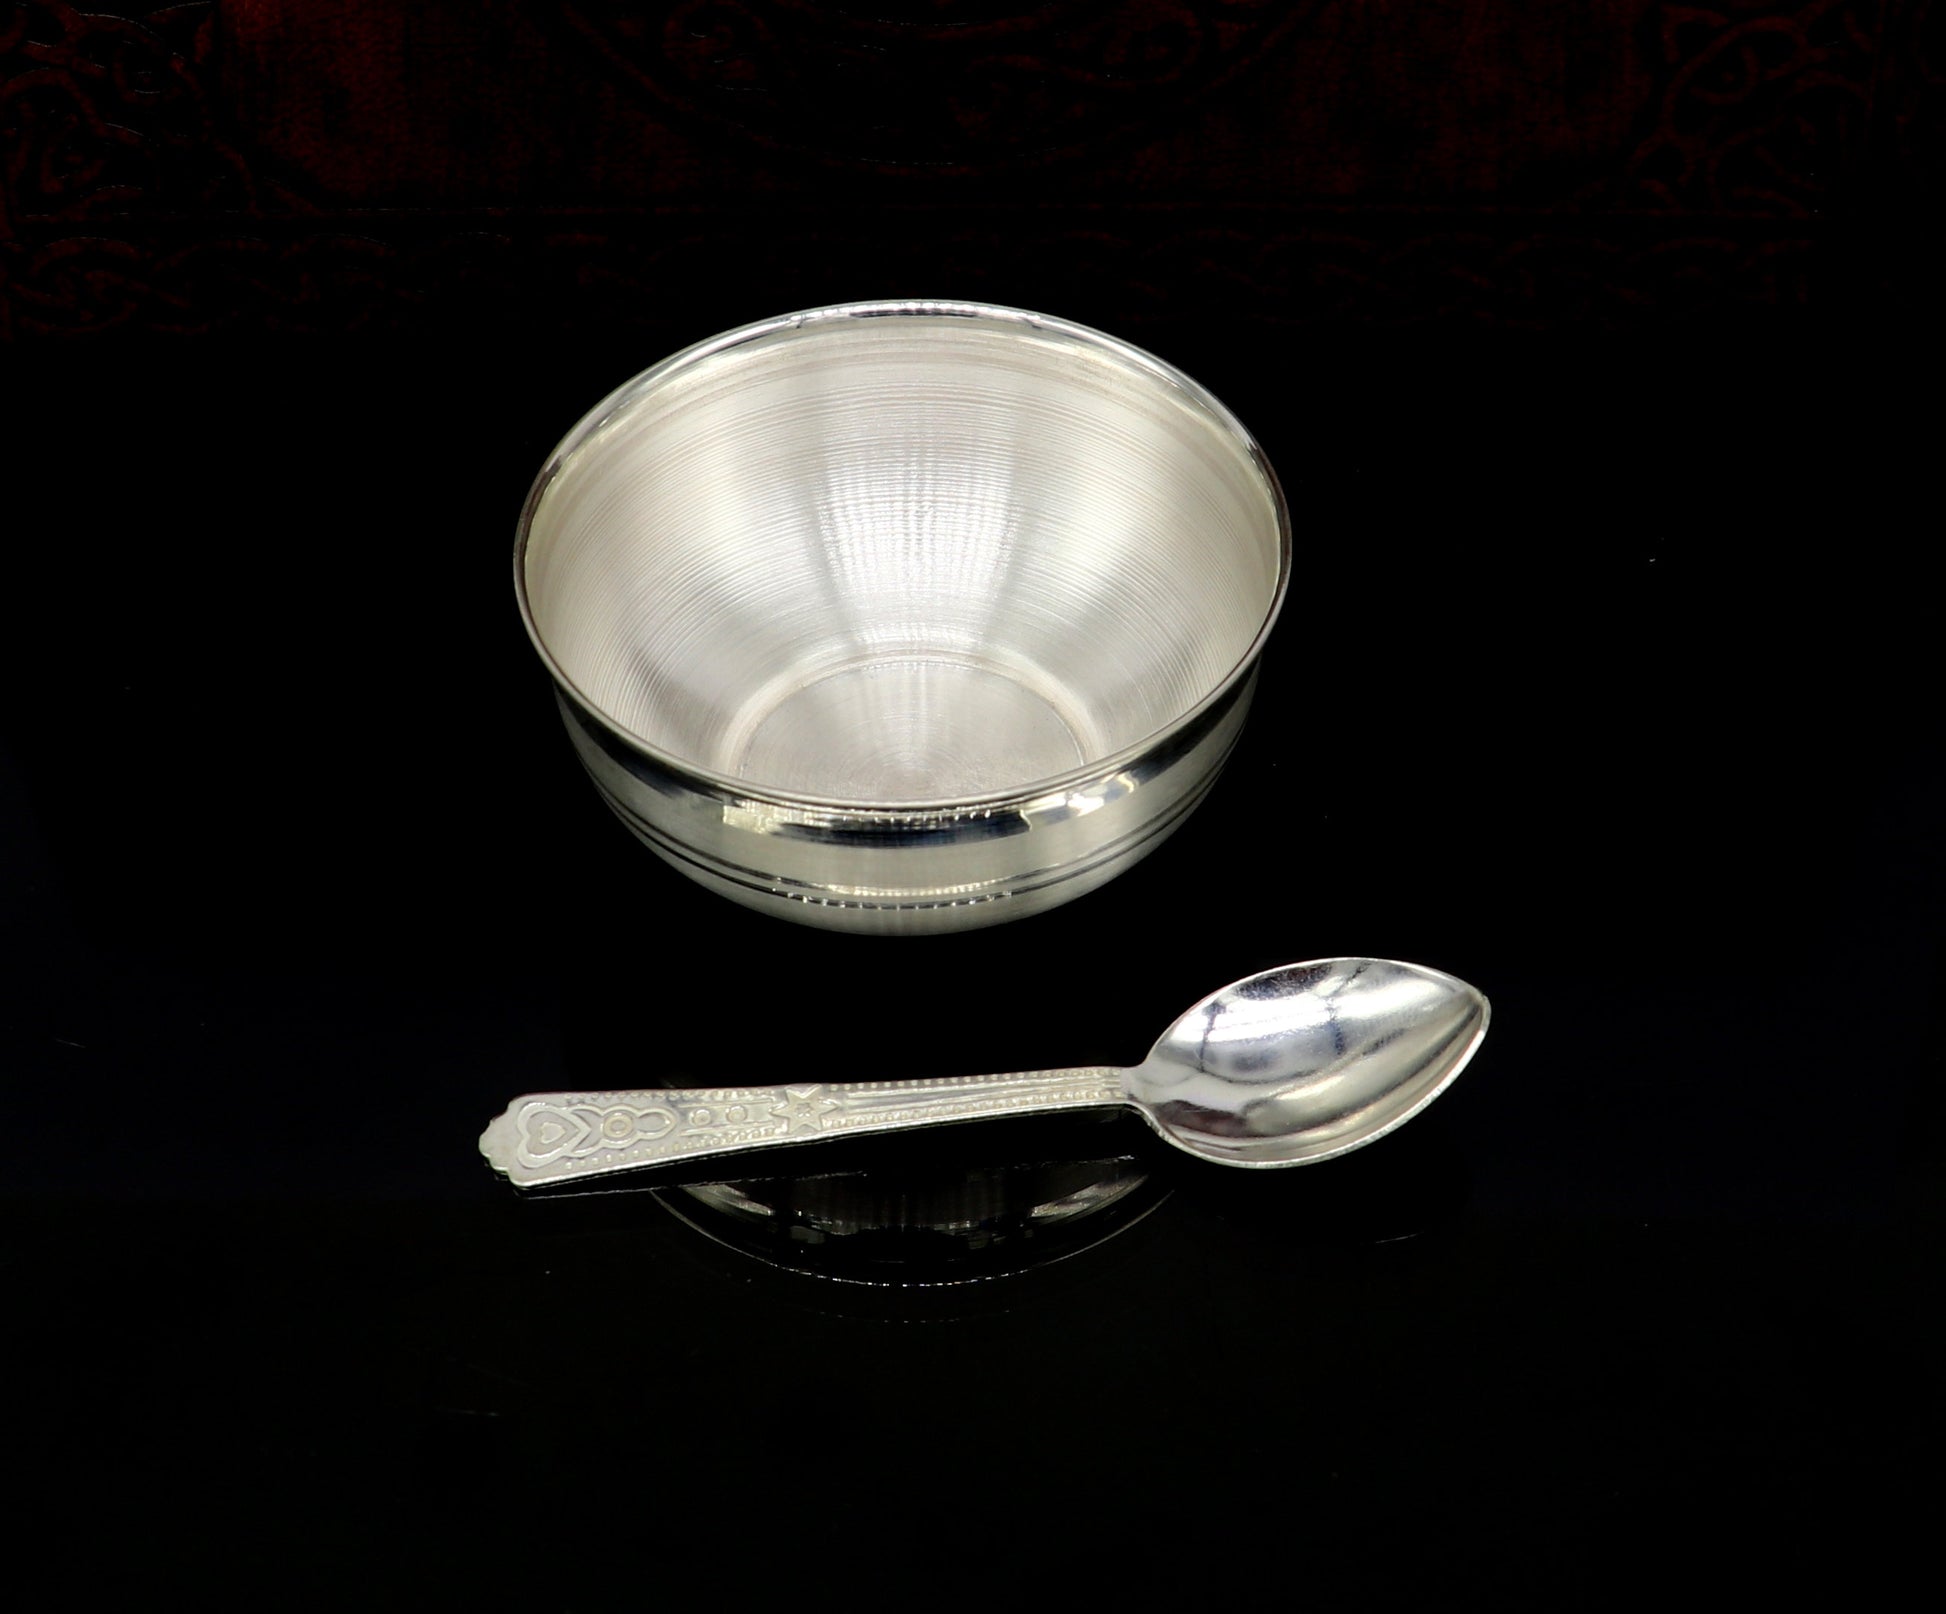 999 pure fine silver handmade utensils, silver article, silver vessel, silver accessories, silver puja art, silver baby bowl set sv106 - TRIBAL ORNAMENTS